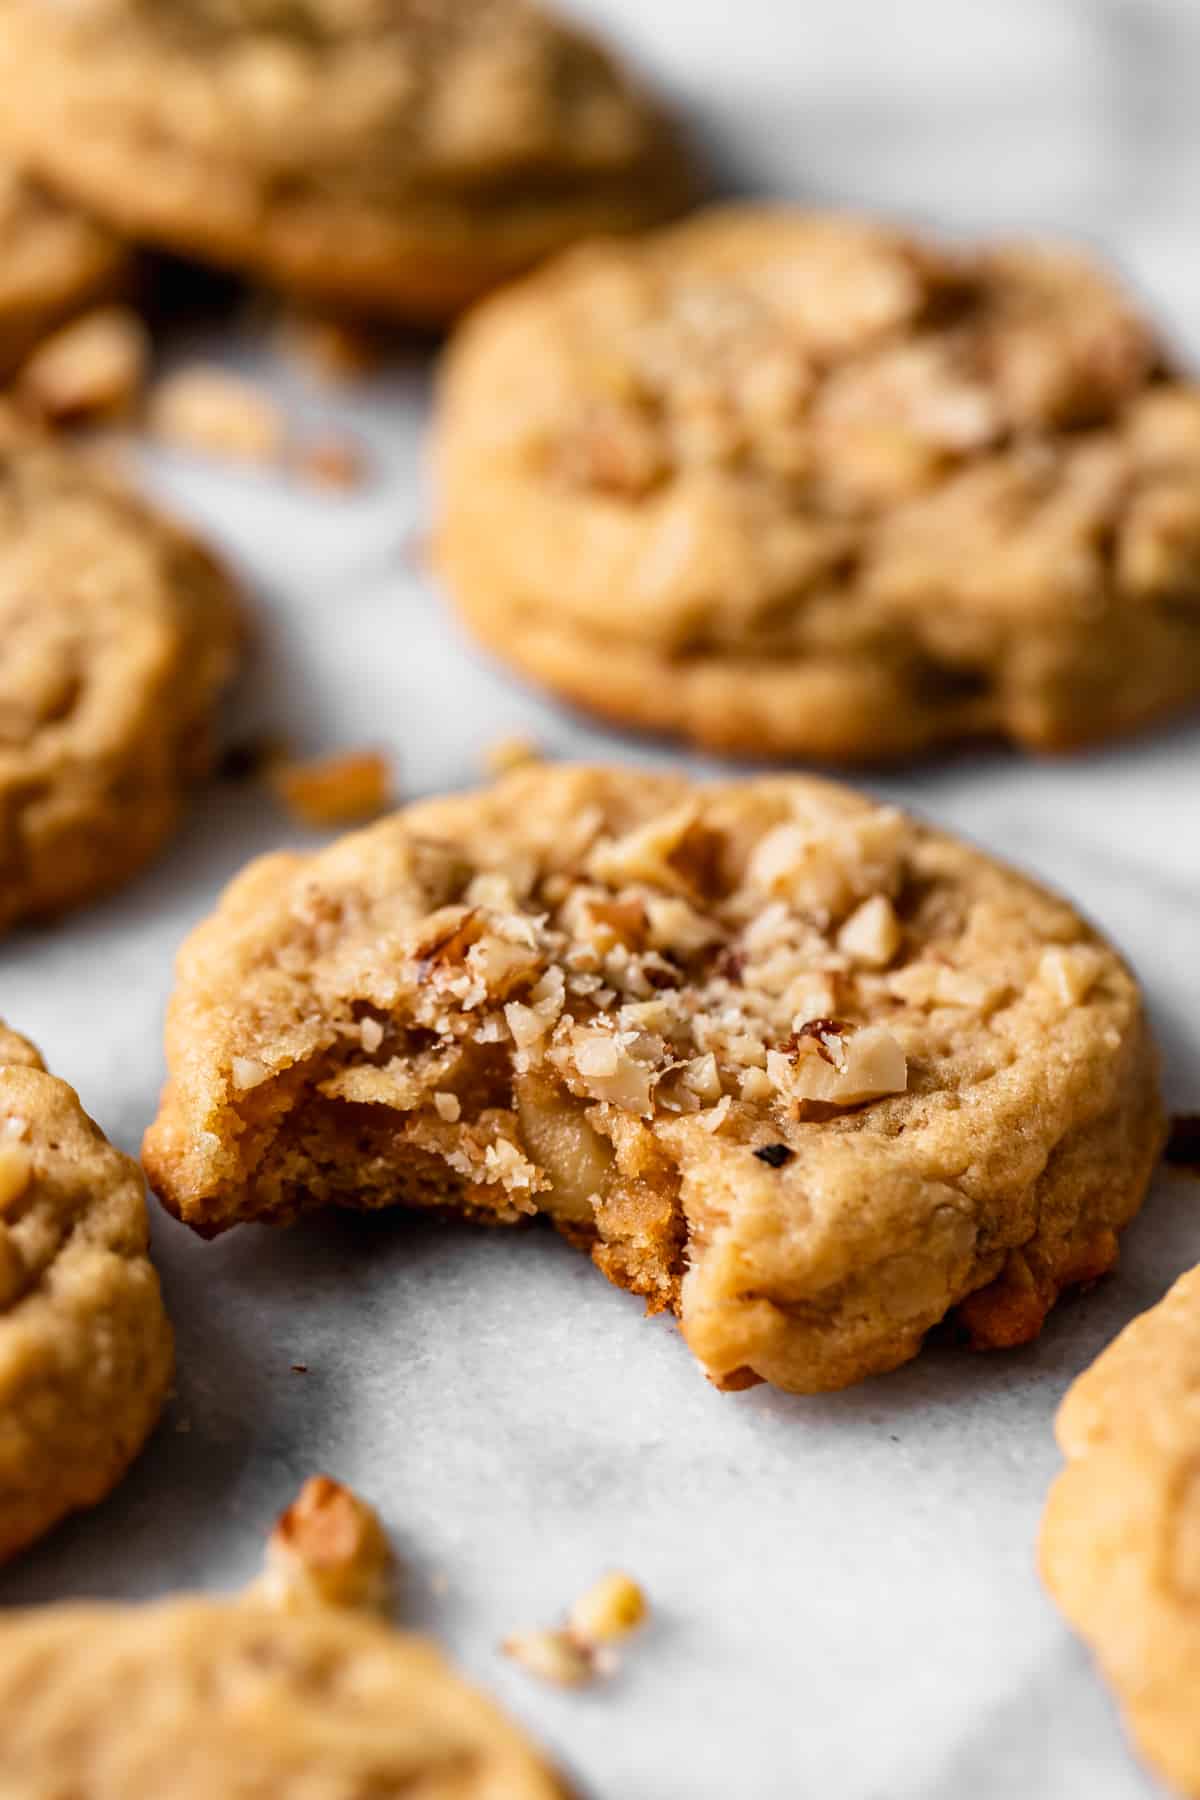 brown sugar cookies with walnuts.